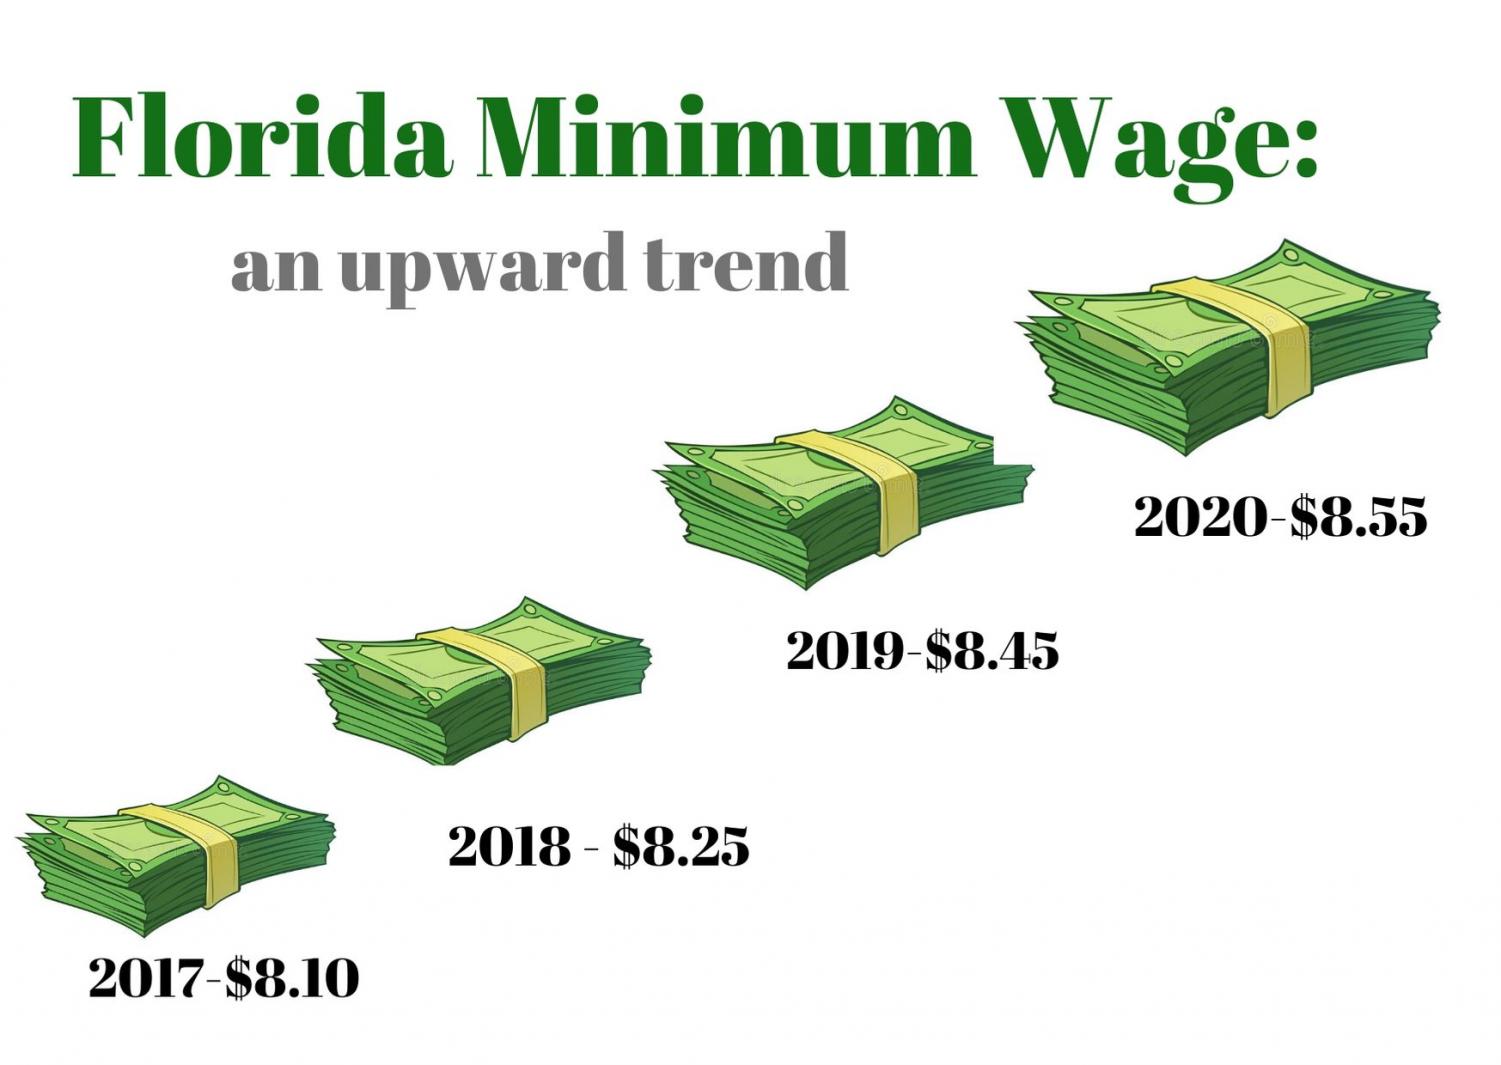 Florida Minimum Wage Set to Increase for Third Consecutive year